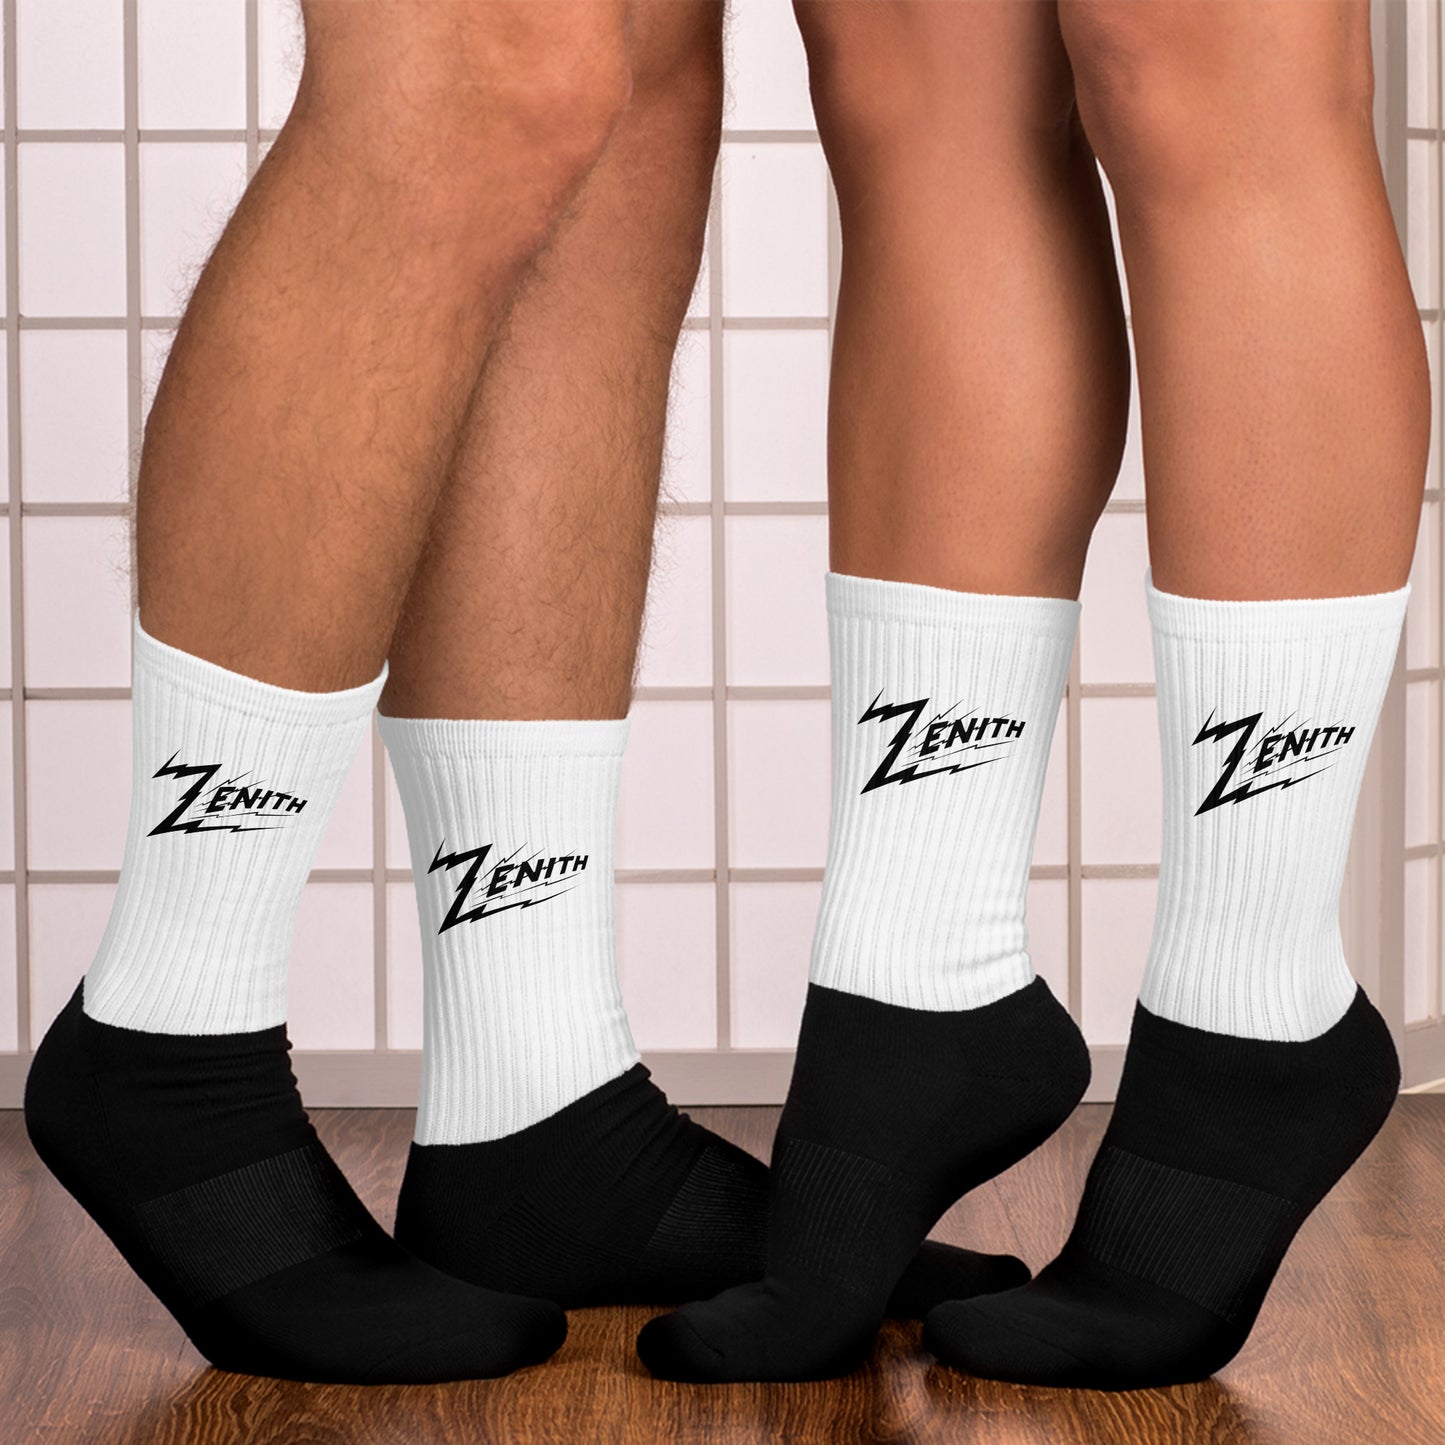 Zenith Socks